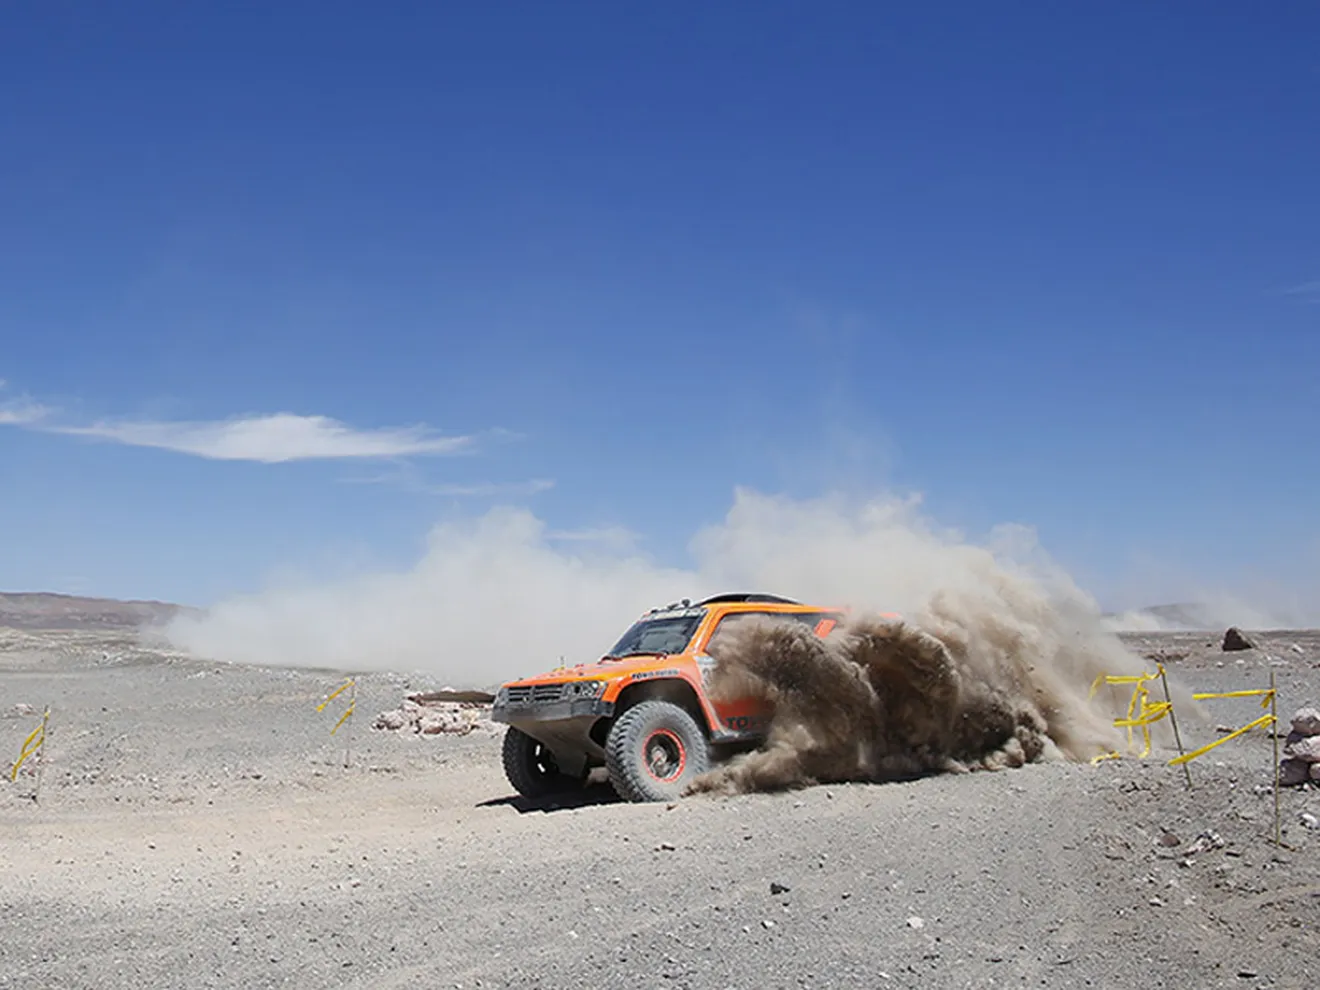 El Dakar 2016 ya tiene nuevo recorrido